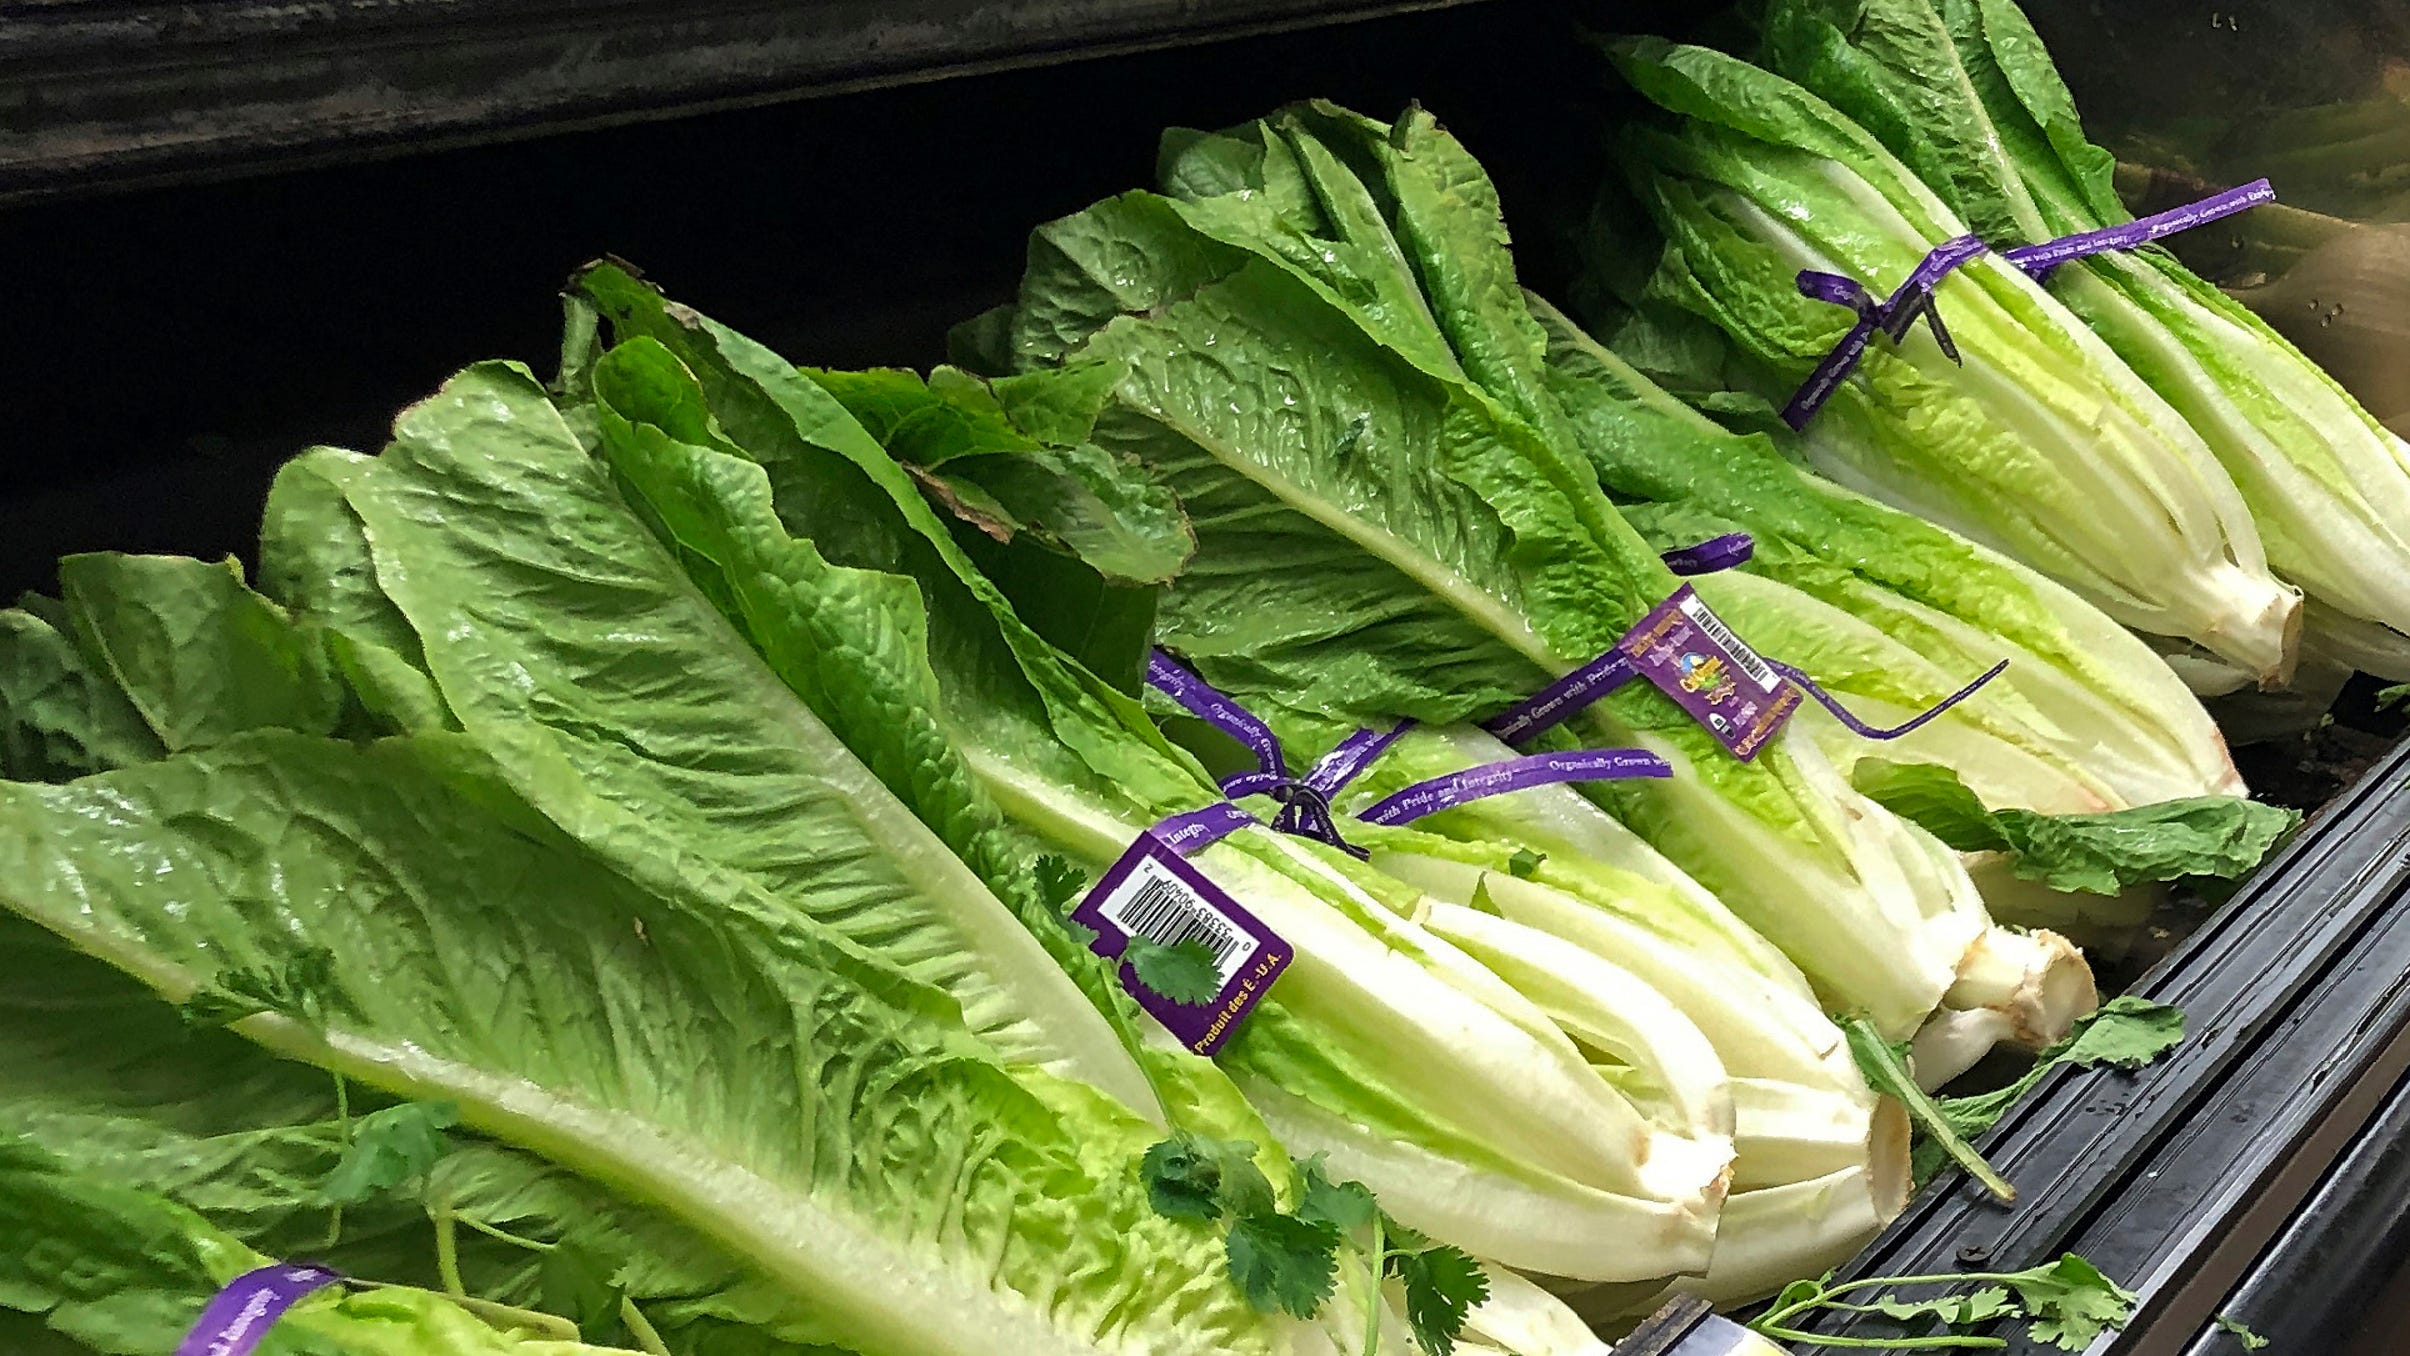 Salinas romaine lettuce E. coli outbreak: Romaine is hard to keep safe